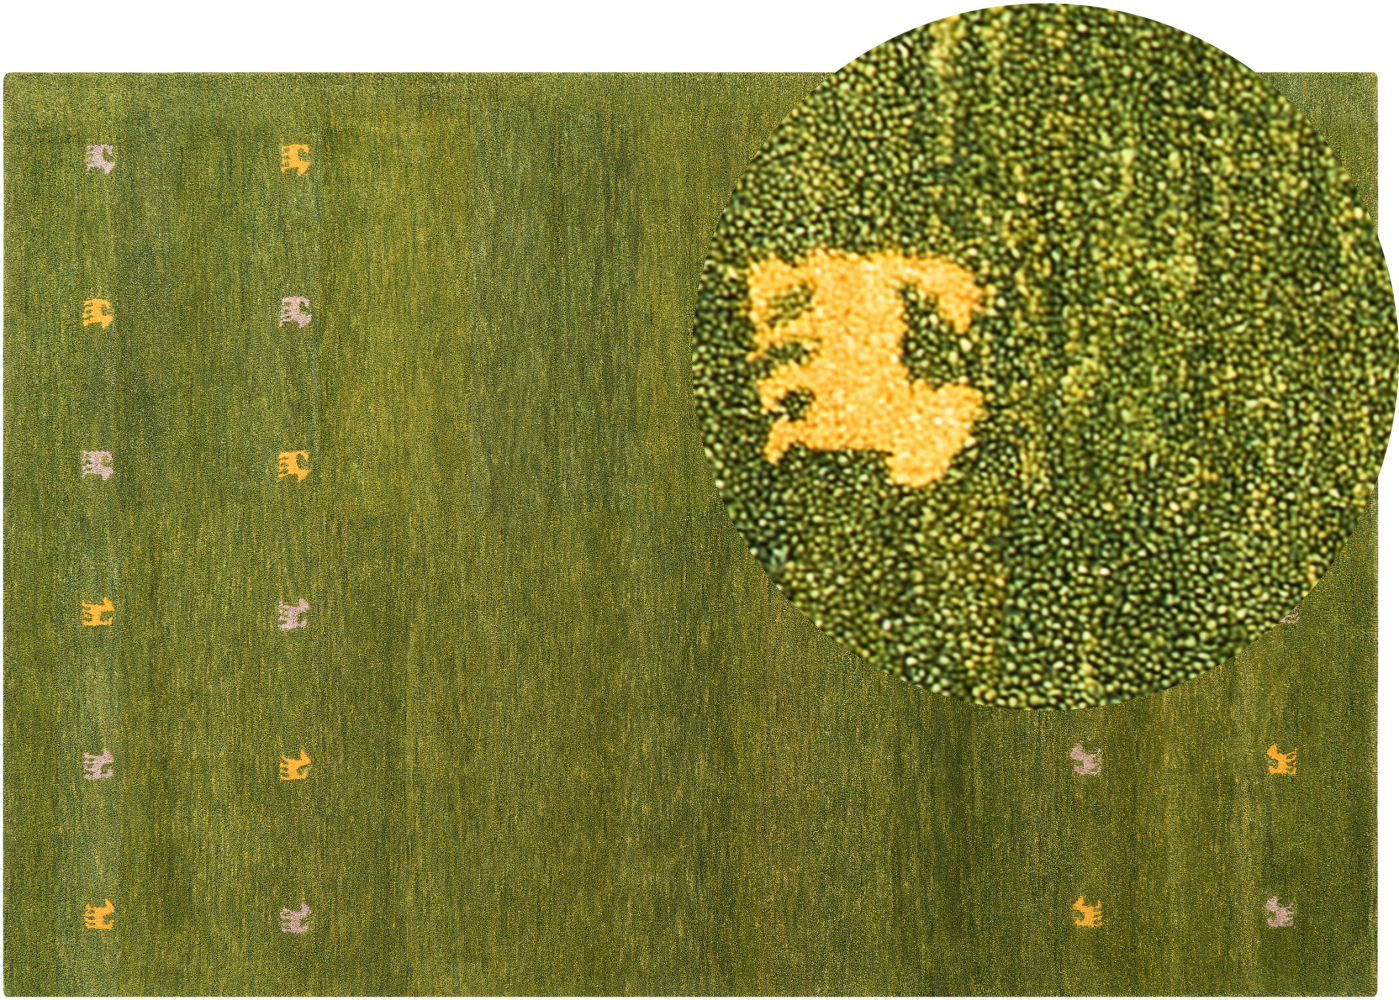 Gabbeh Teppich Wolle grün 200 x 300 cm Tiermuster Hochflor YULAFI Bild 1